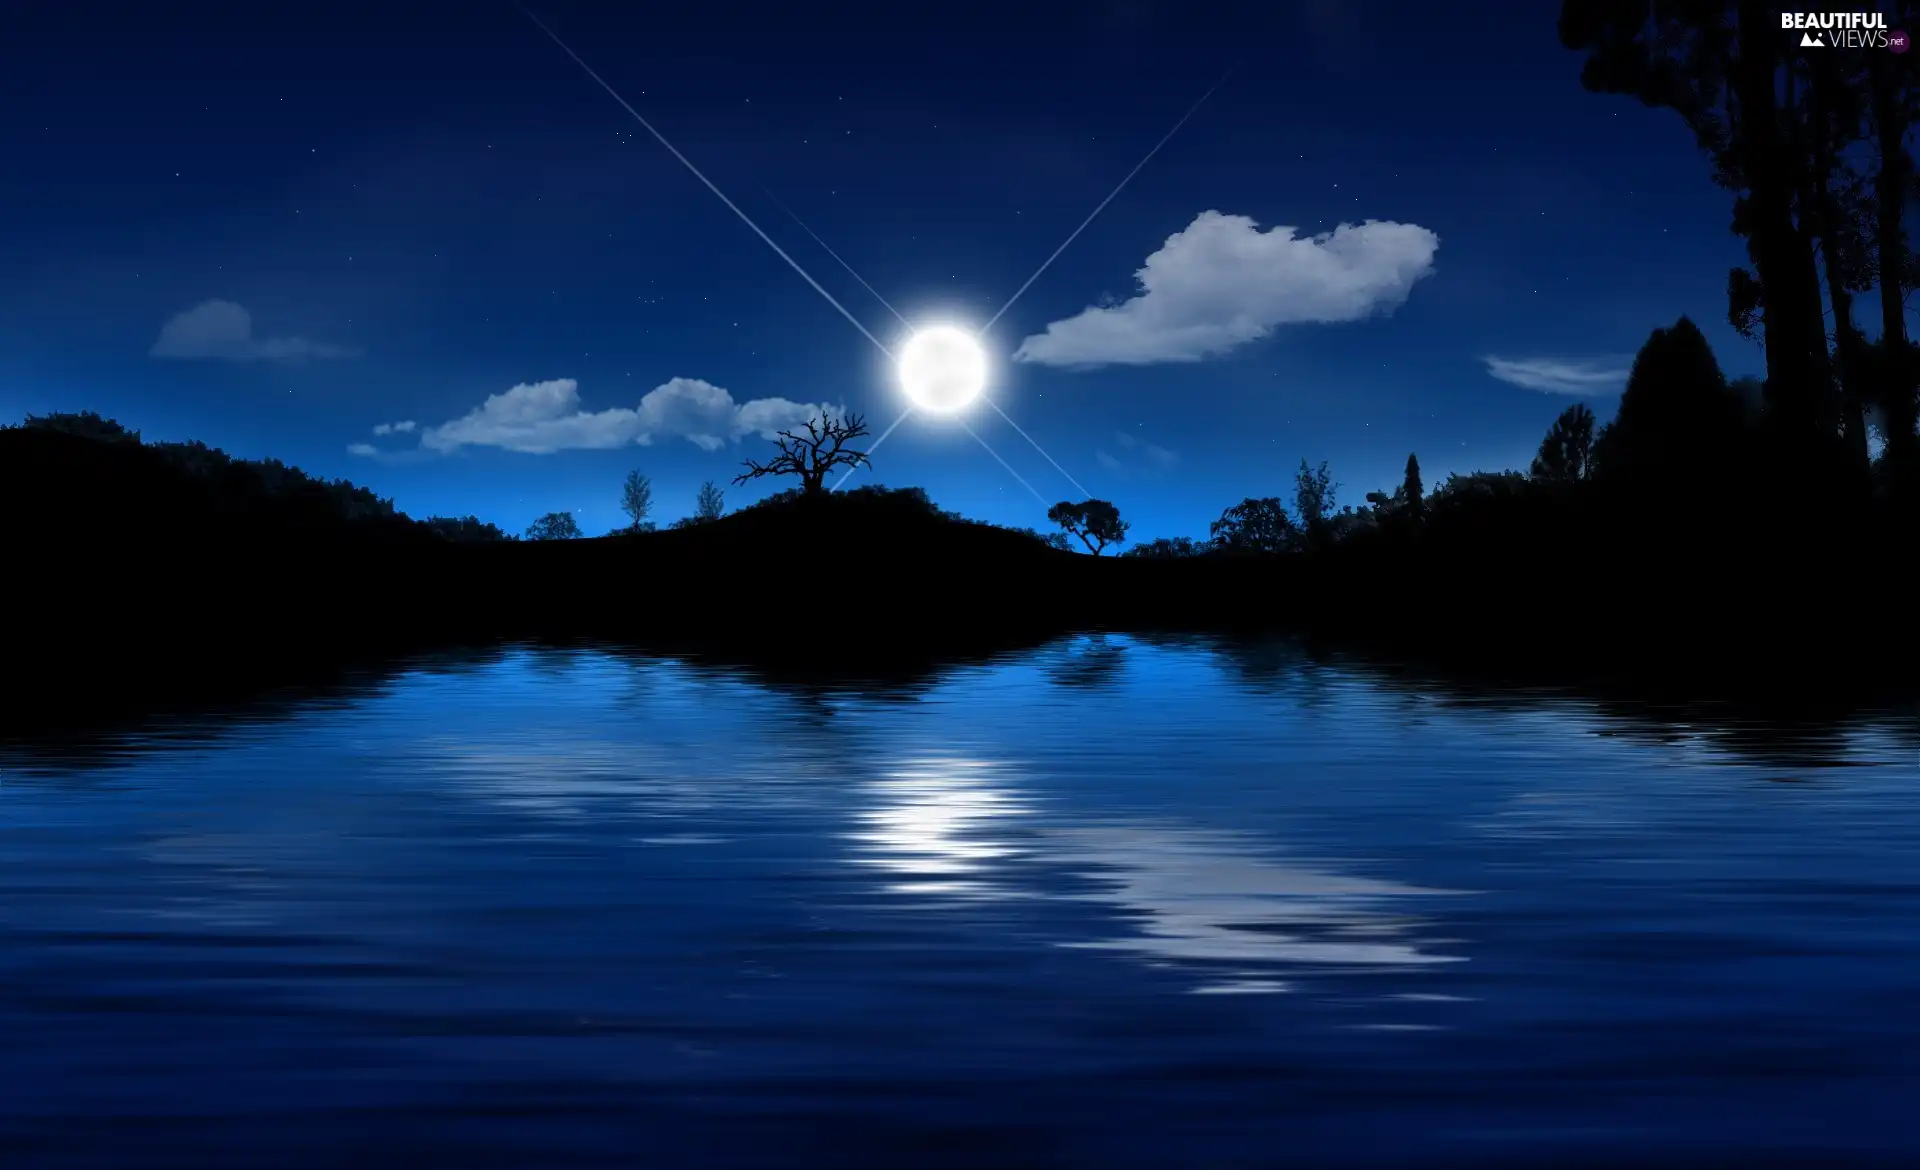 star, reflection, lake, moon, Night